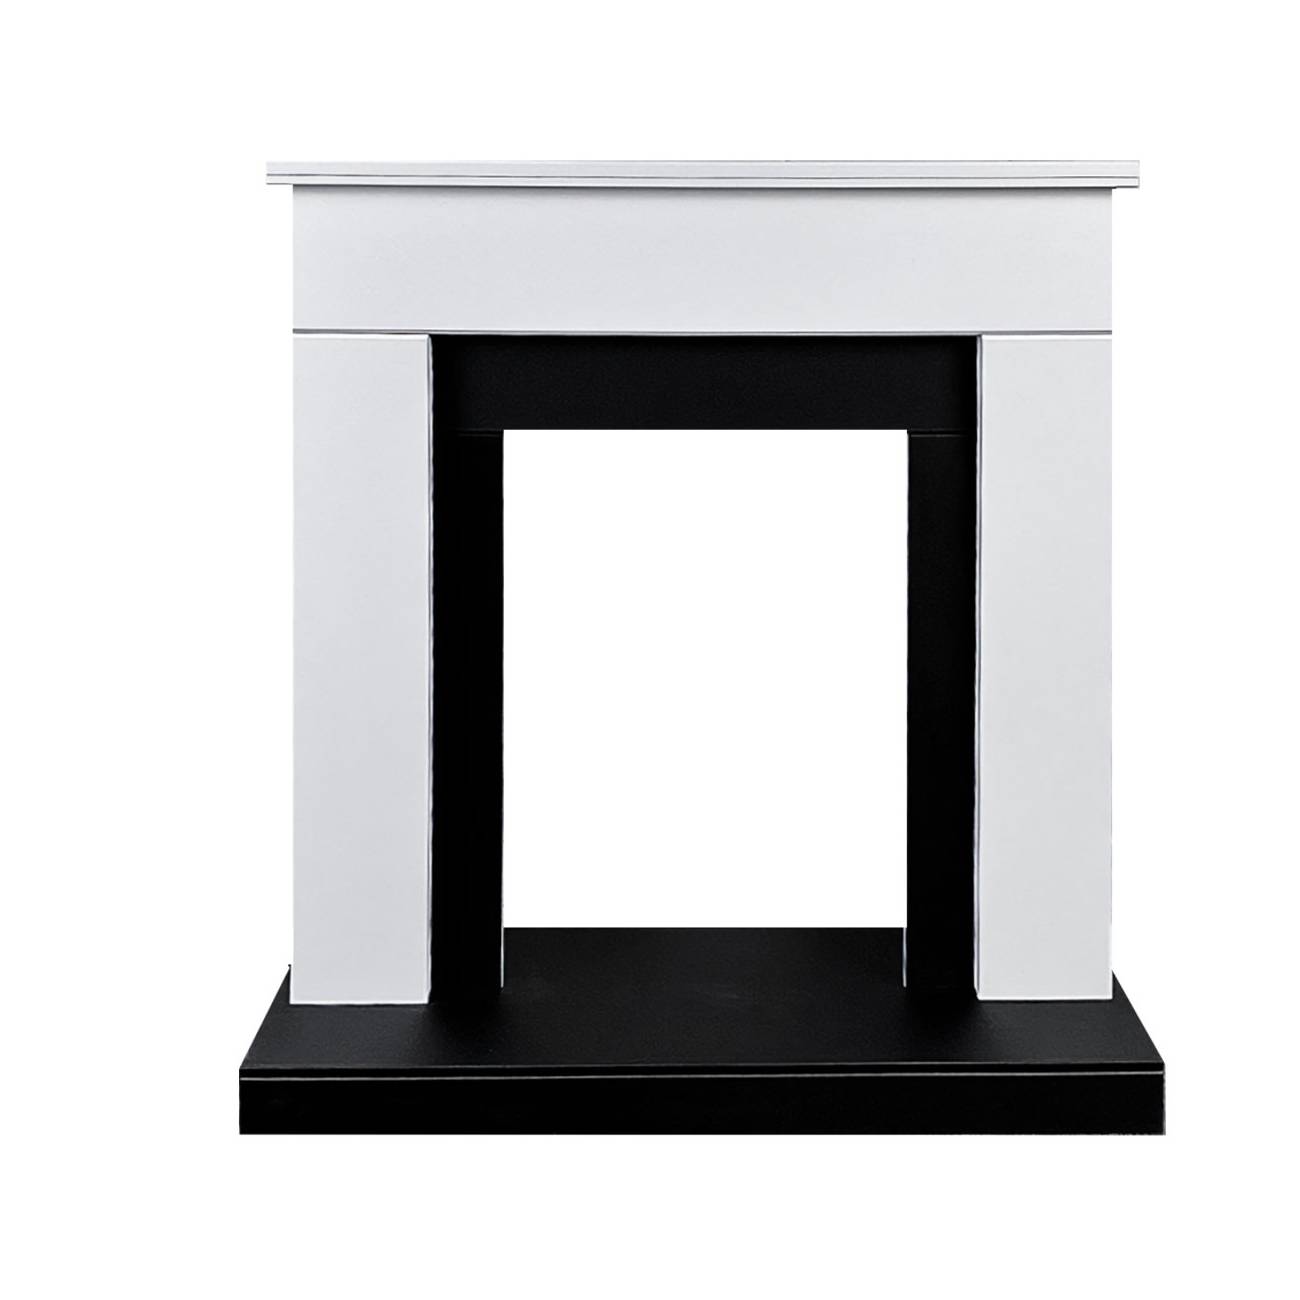 портал royal flame basel r белый с черным Портал Royal Flame Bergen Std Sft (разборный) Белый с черным